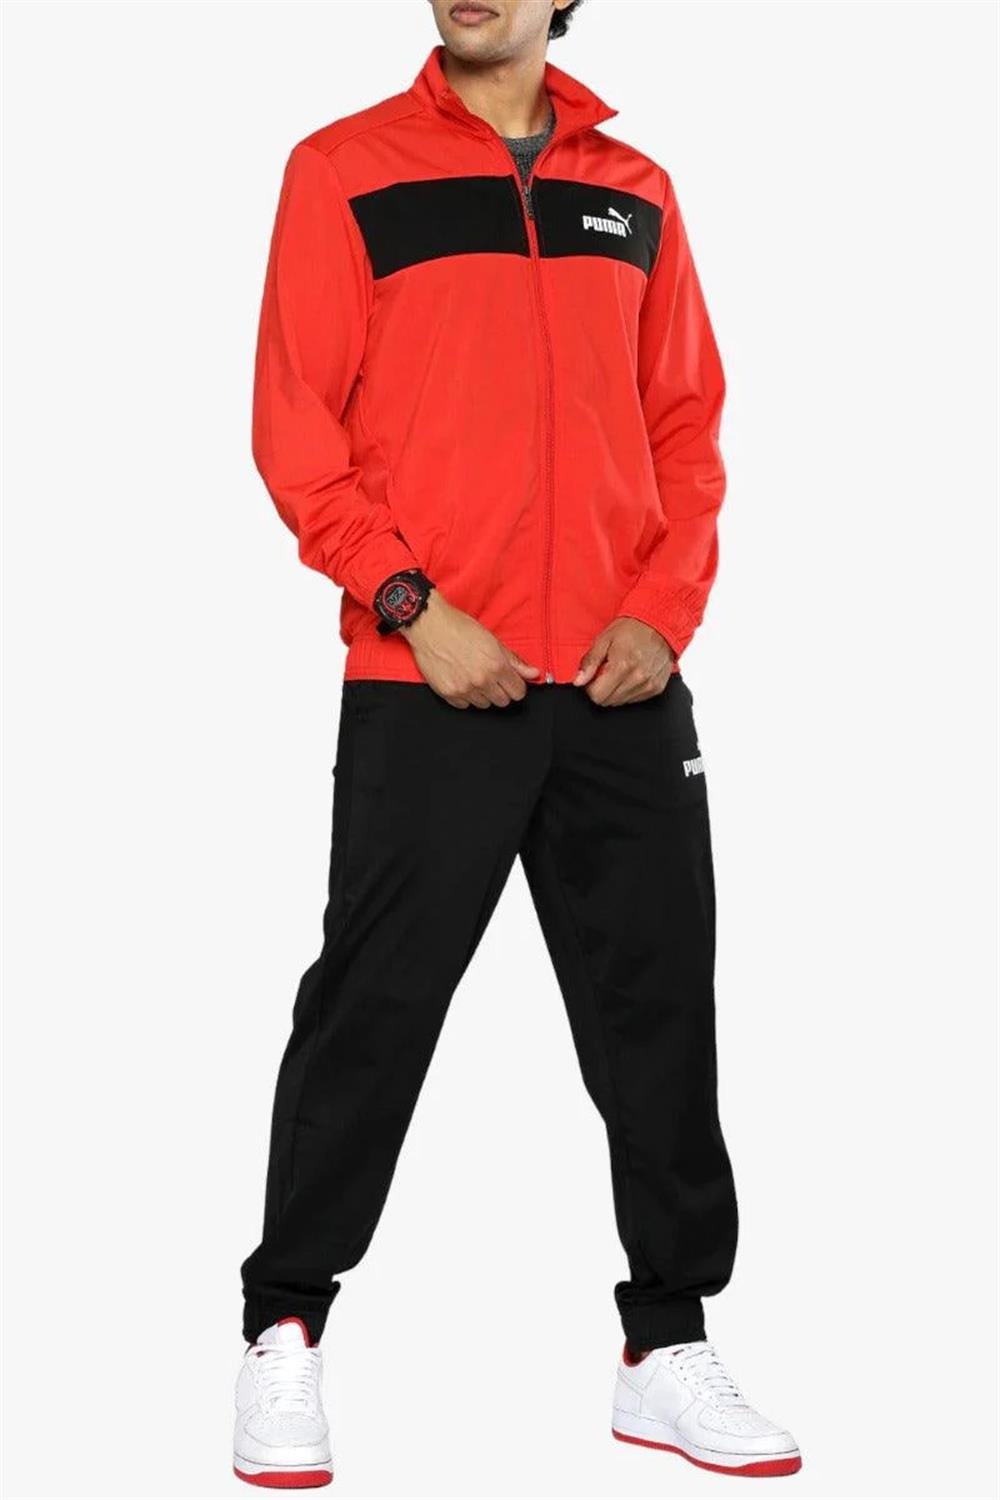 Puma Poly Suit cl High Risk Red Erkek Eşofman Takımı 845844-11 | Gözde Spor